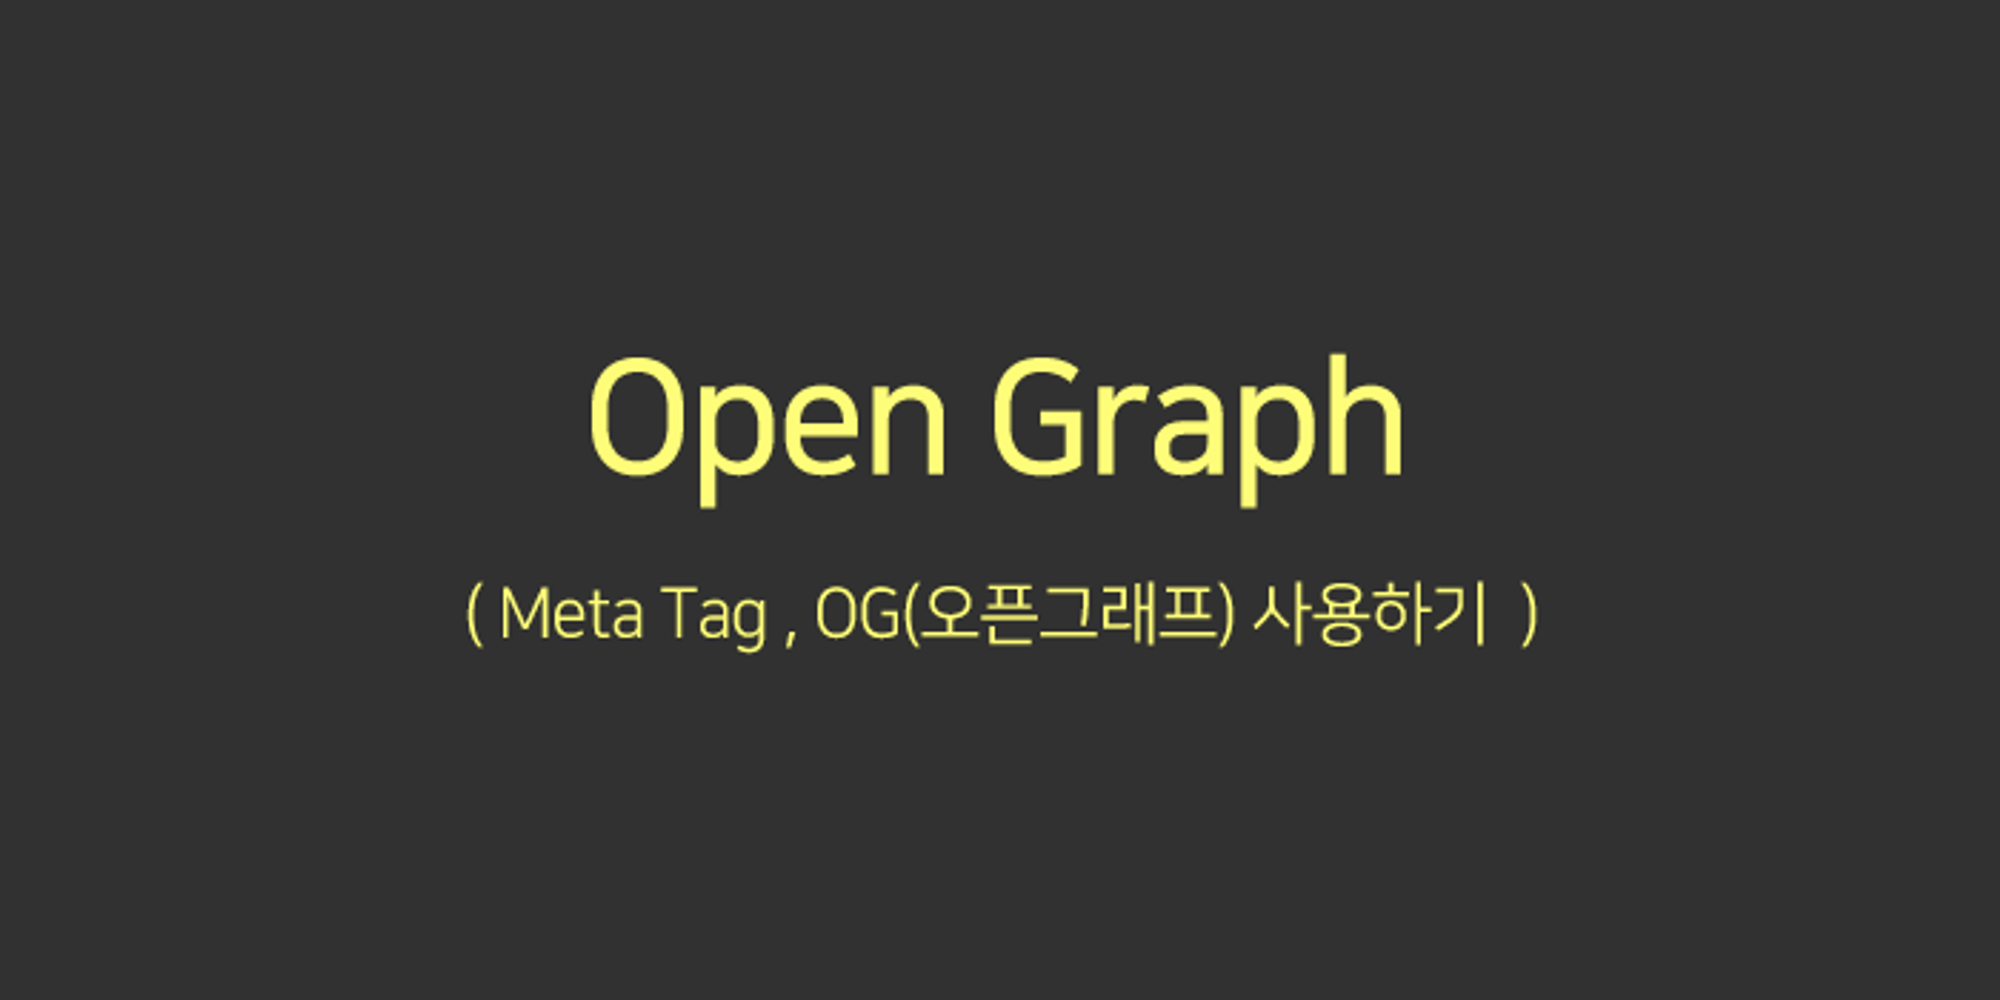 Meta Tag , OG(오픈그래프) 사용하기